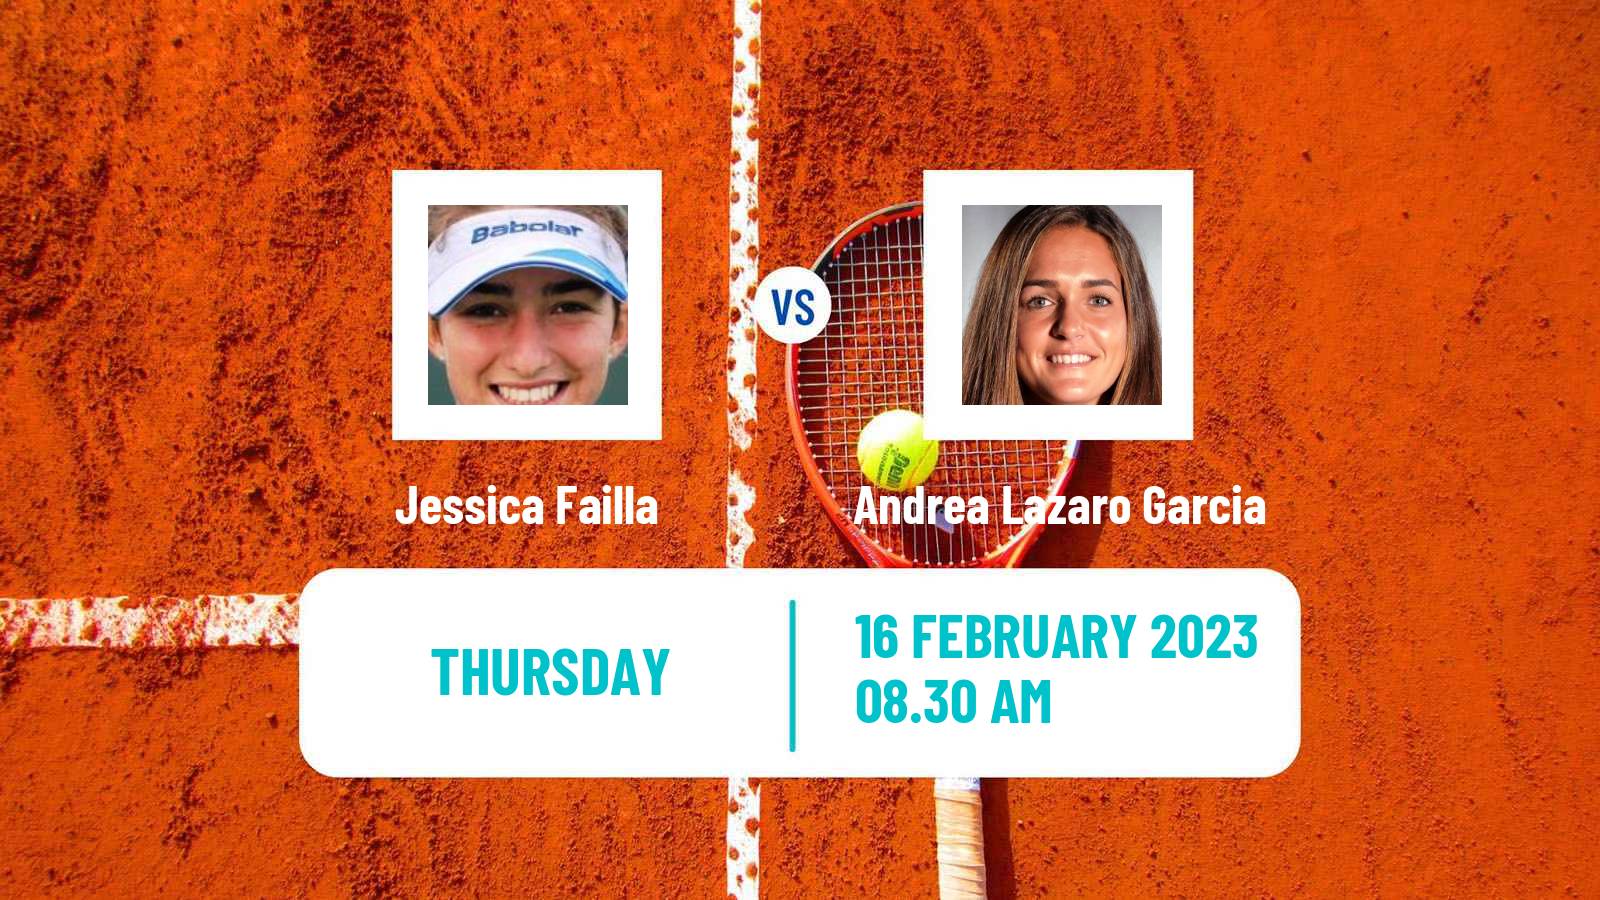 Tennis ITF Tournaments Jessica Failla - Andrea Lazaro Garcia